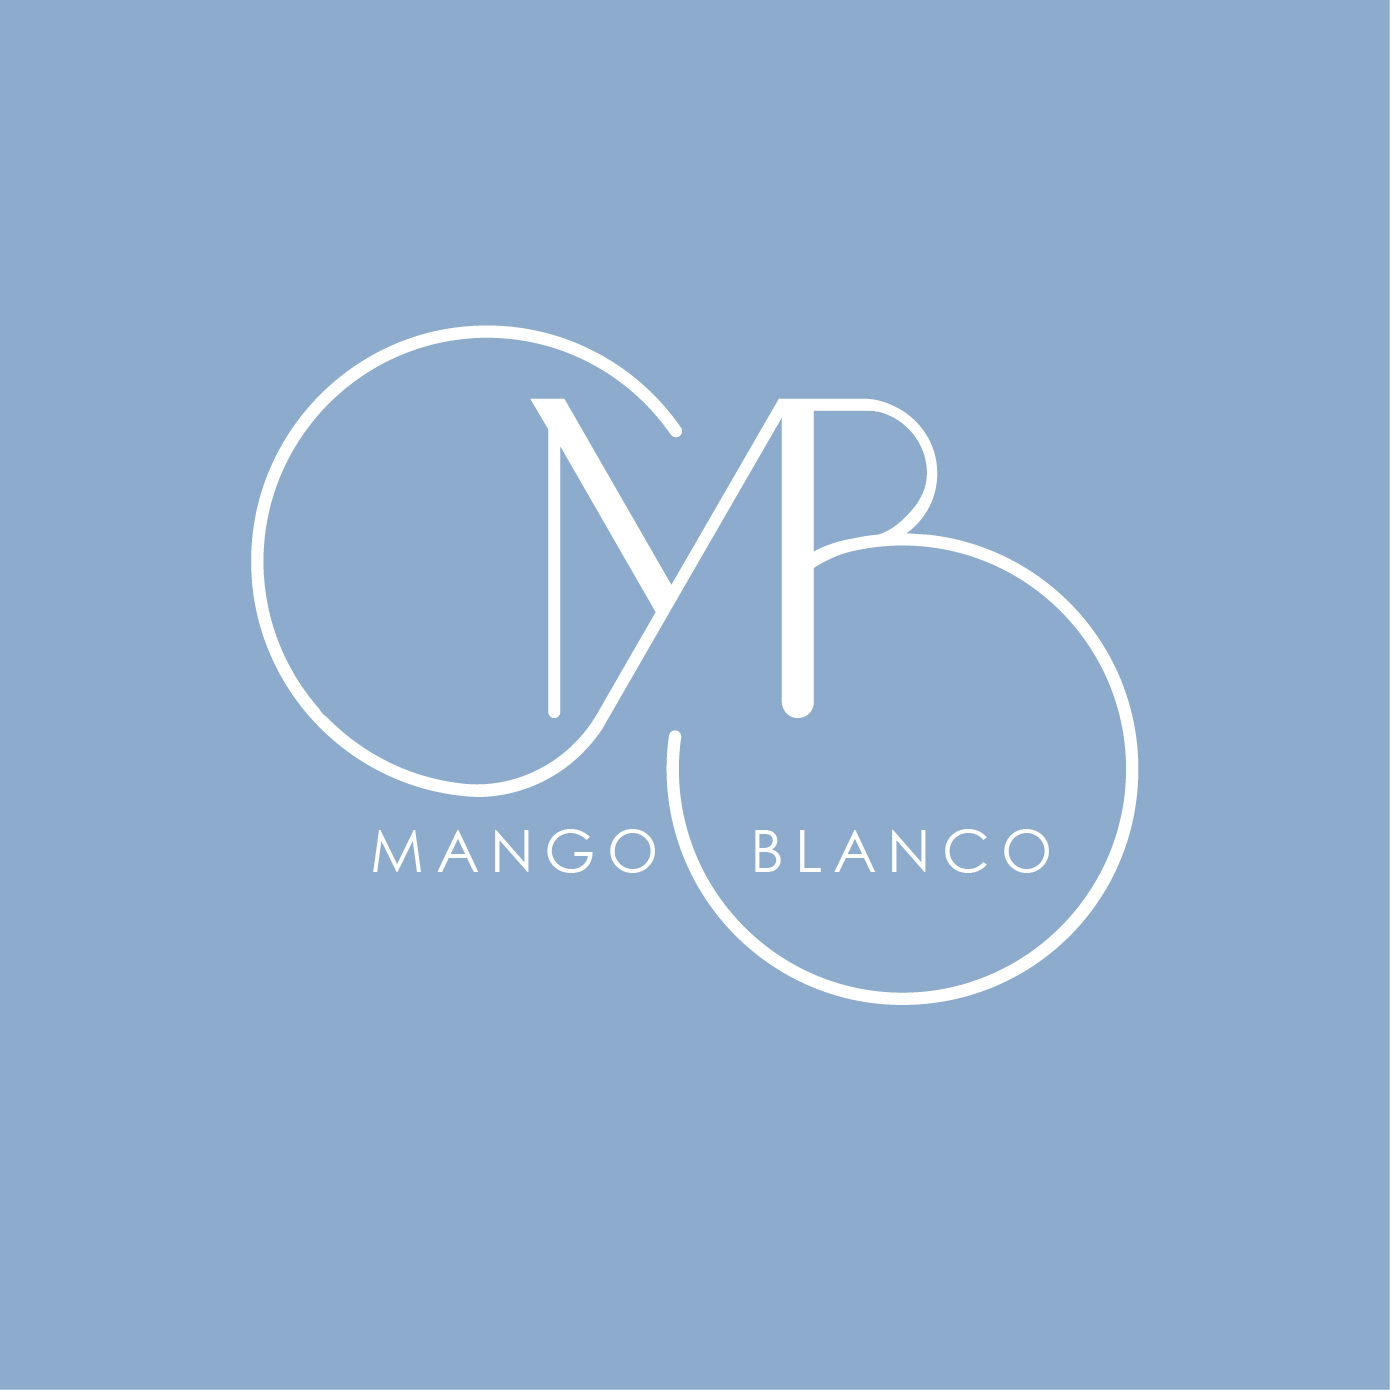 MANGO BLANCO